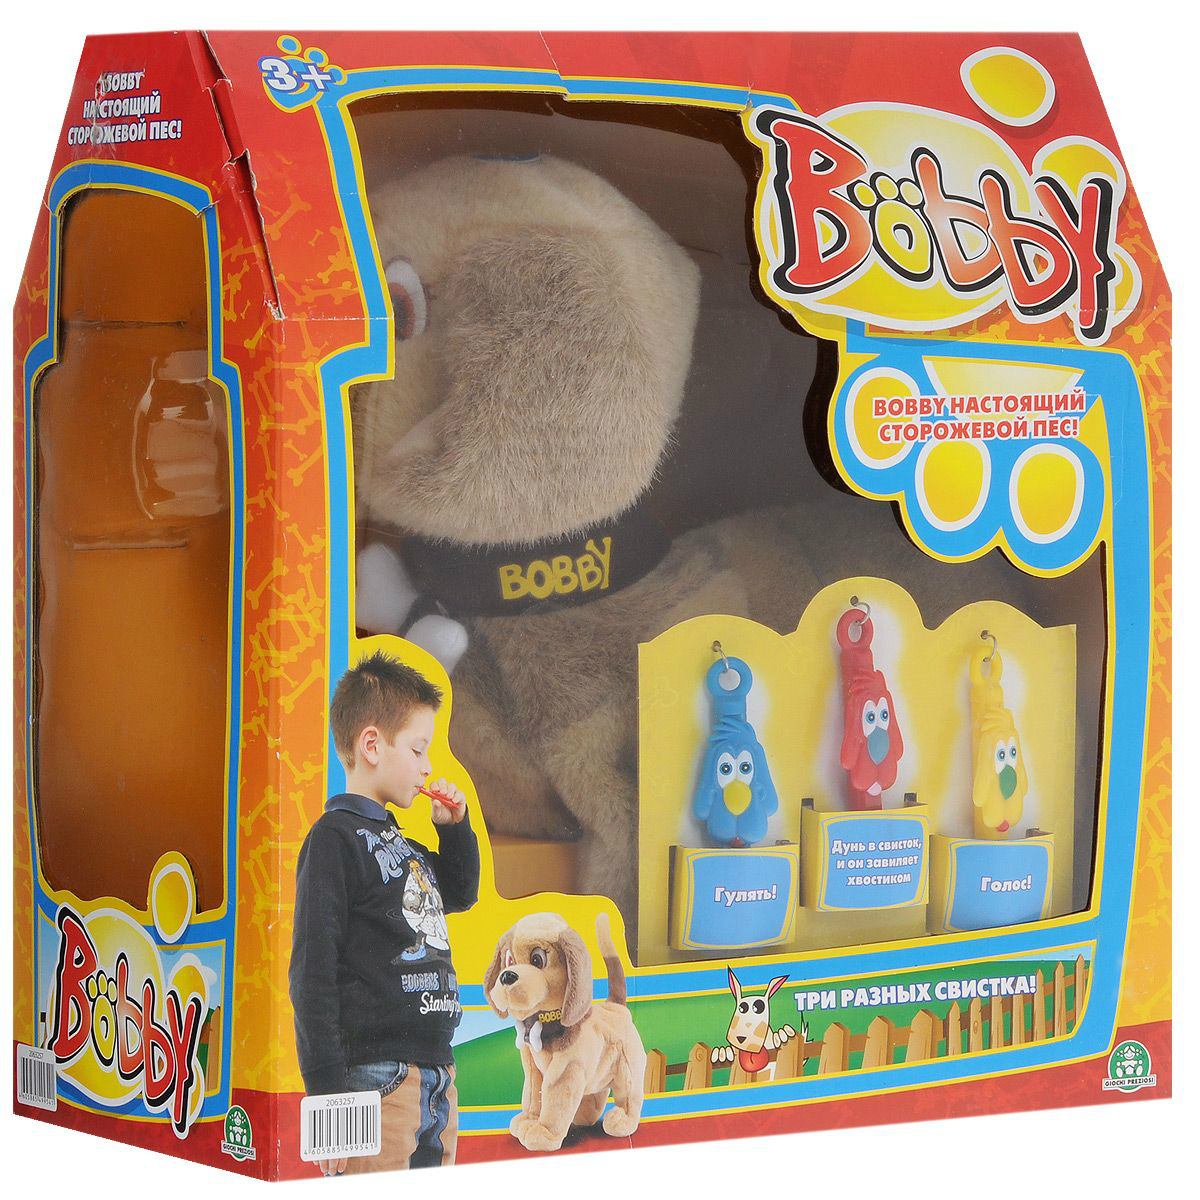 Интерактивная игрушка «Собака Bobby»